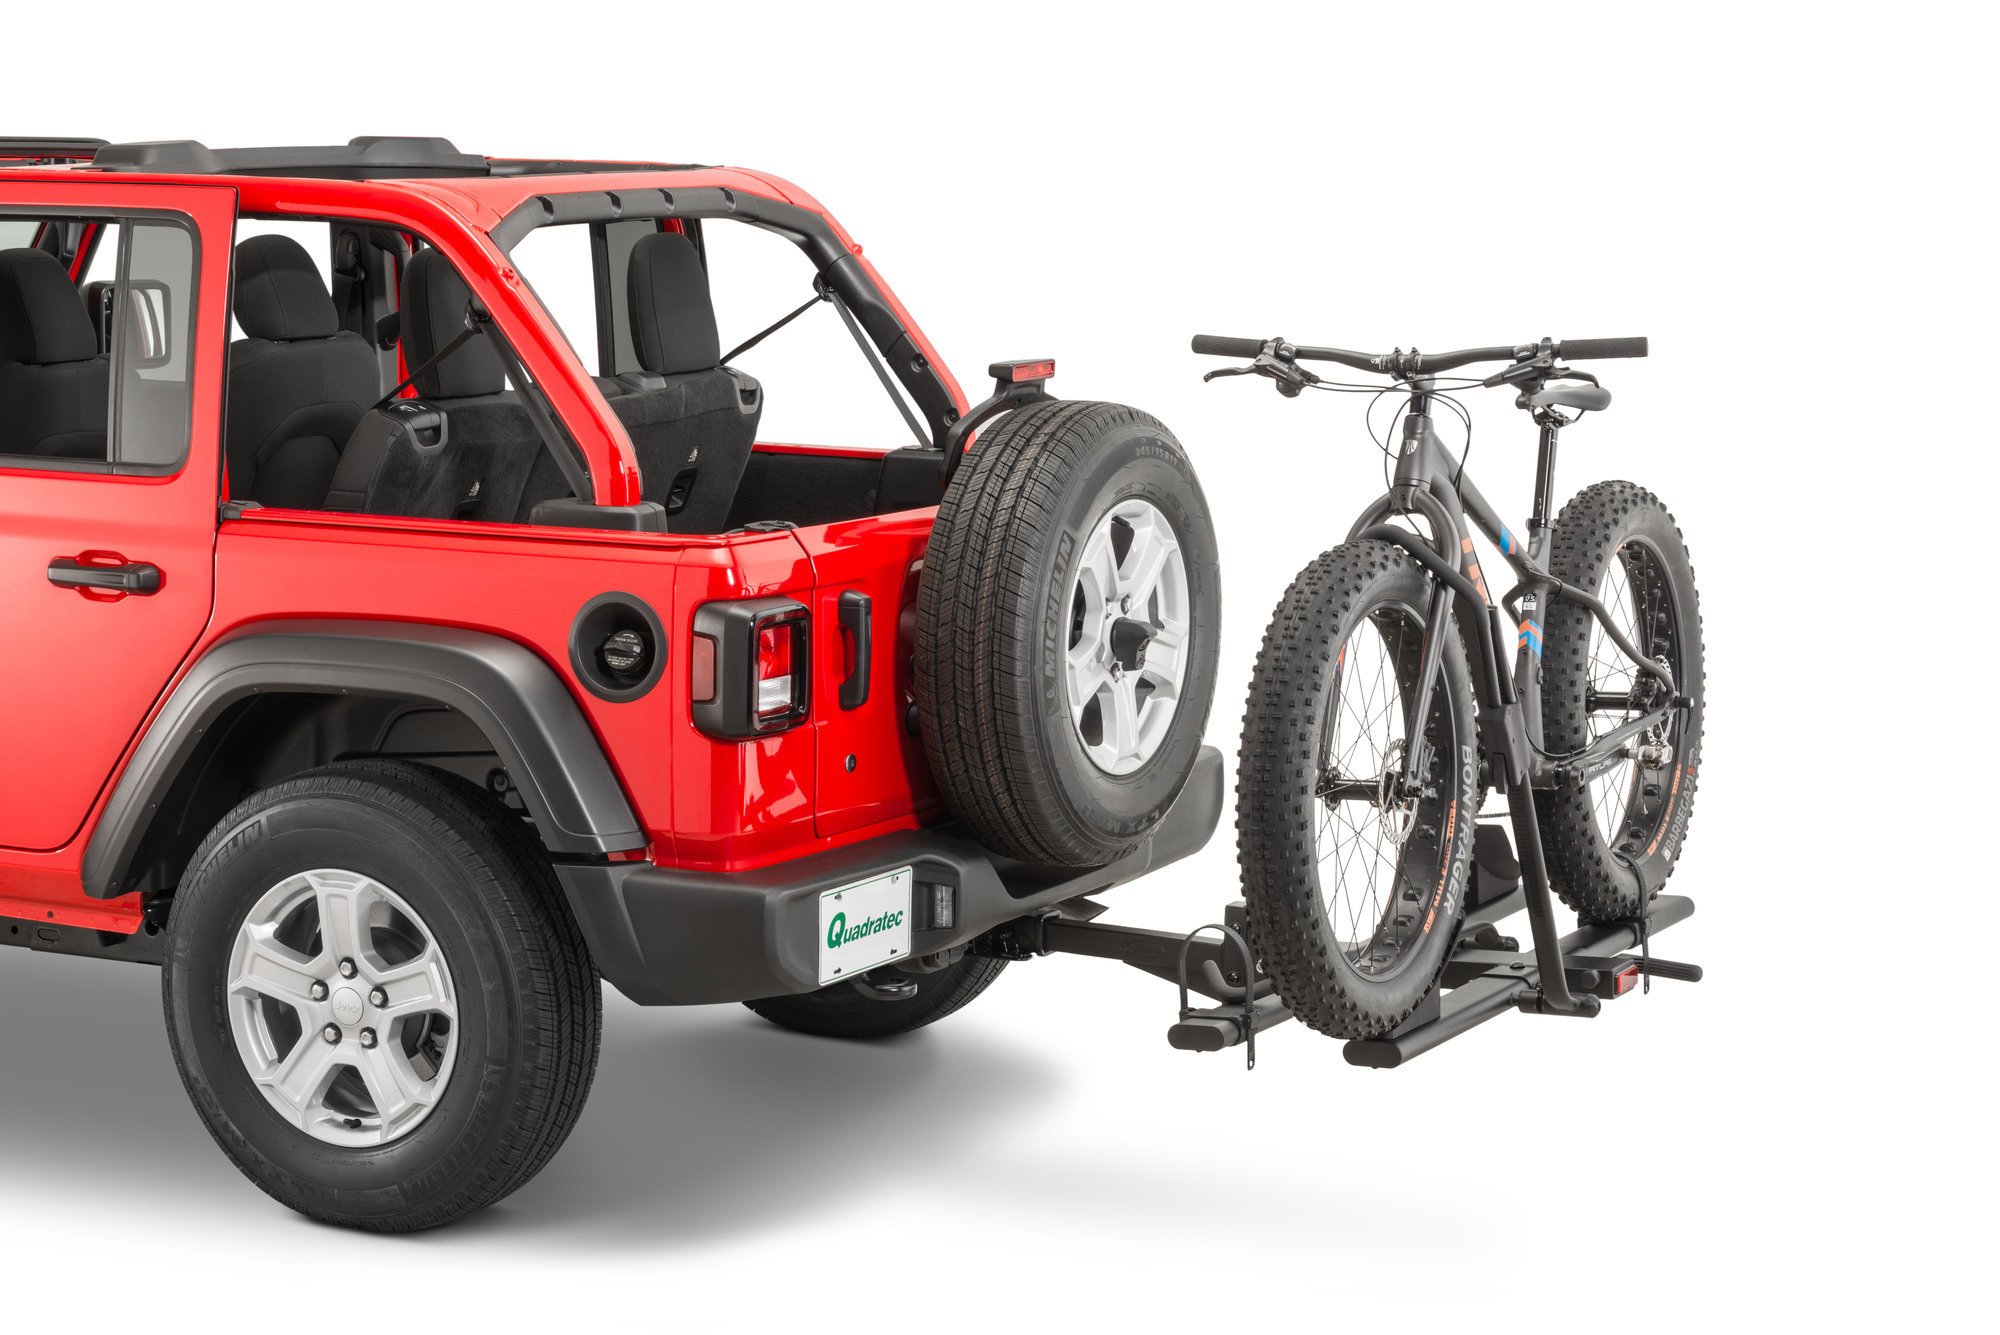 Bike Hitch Rack For Jeep Wrangler Flash Sales, 55% OFF |  